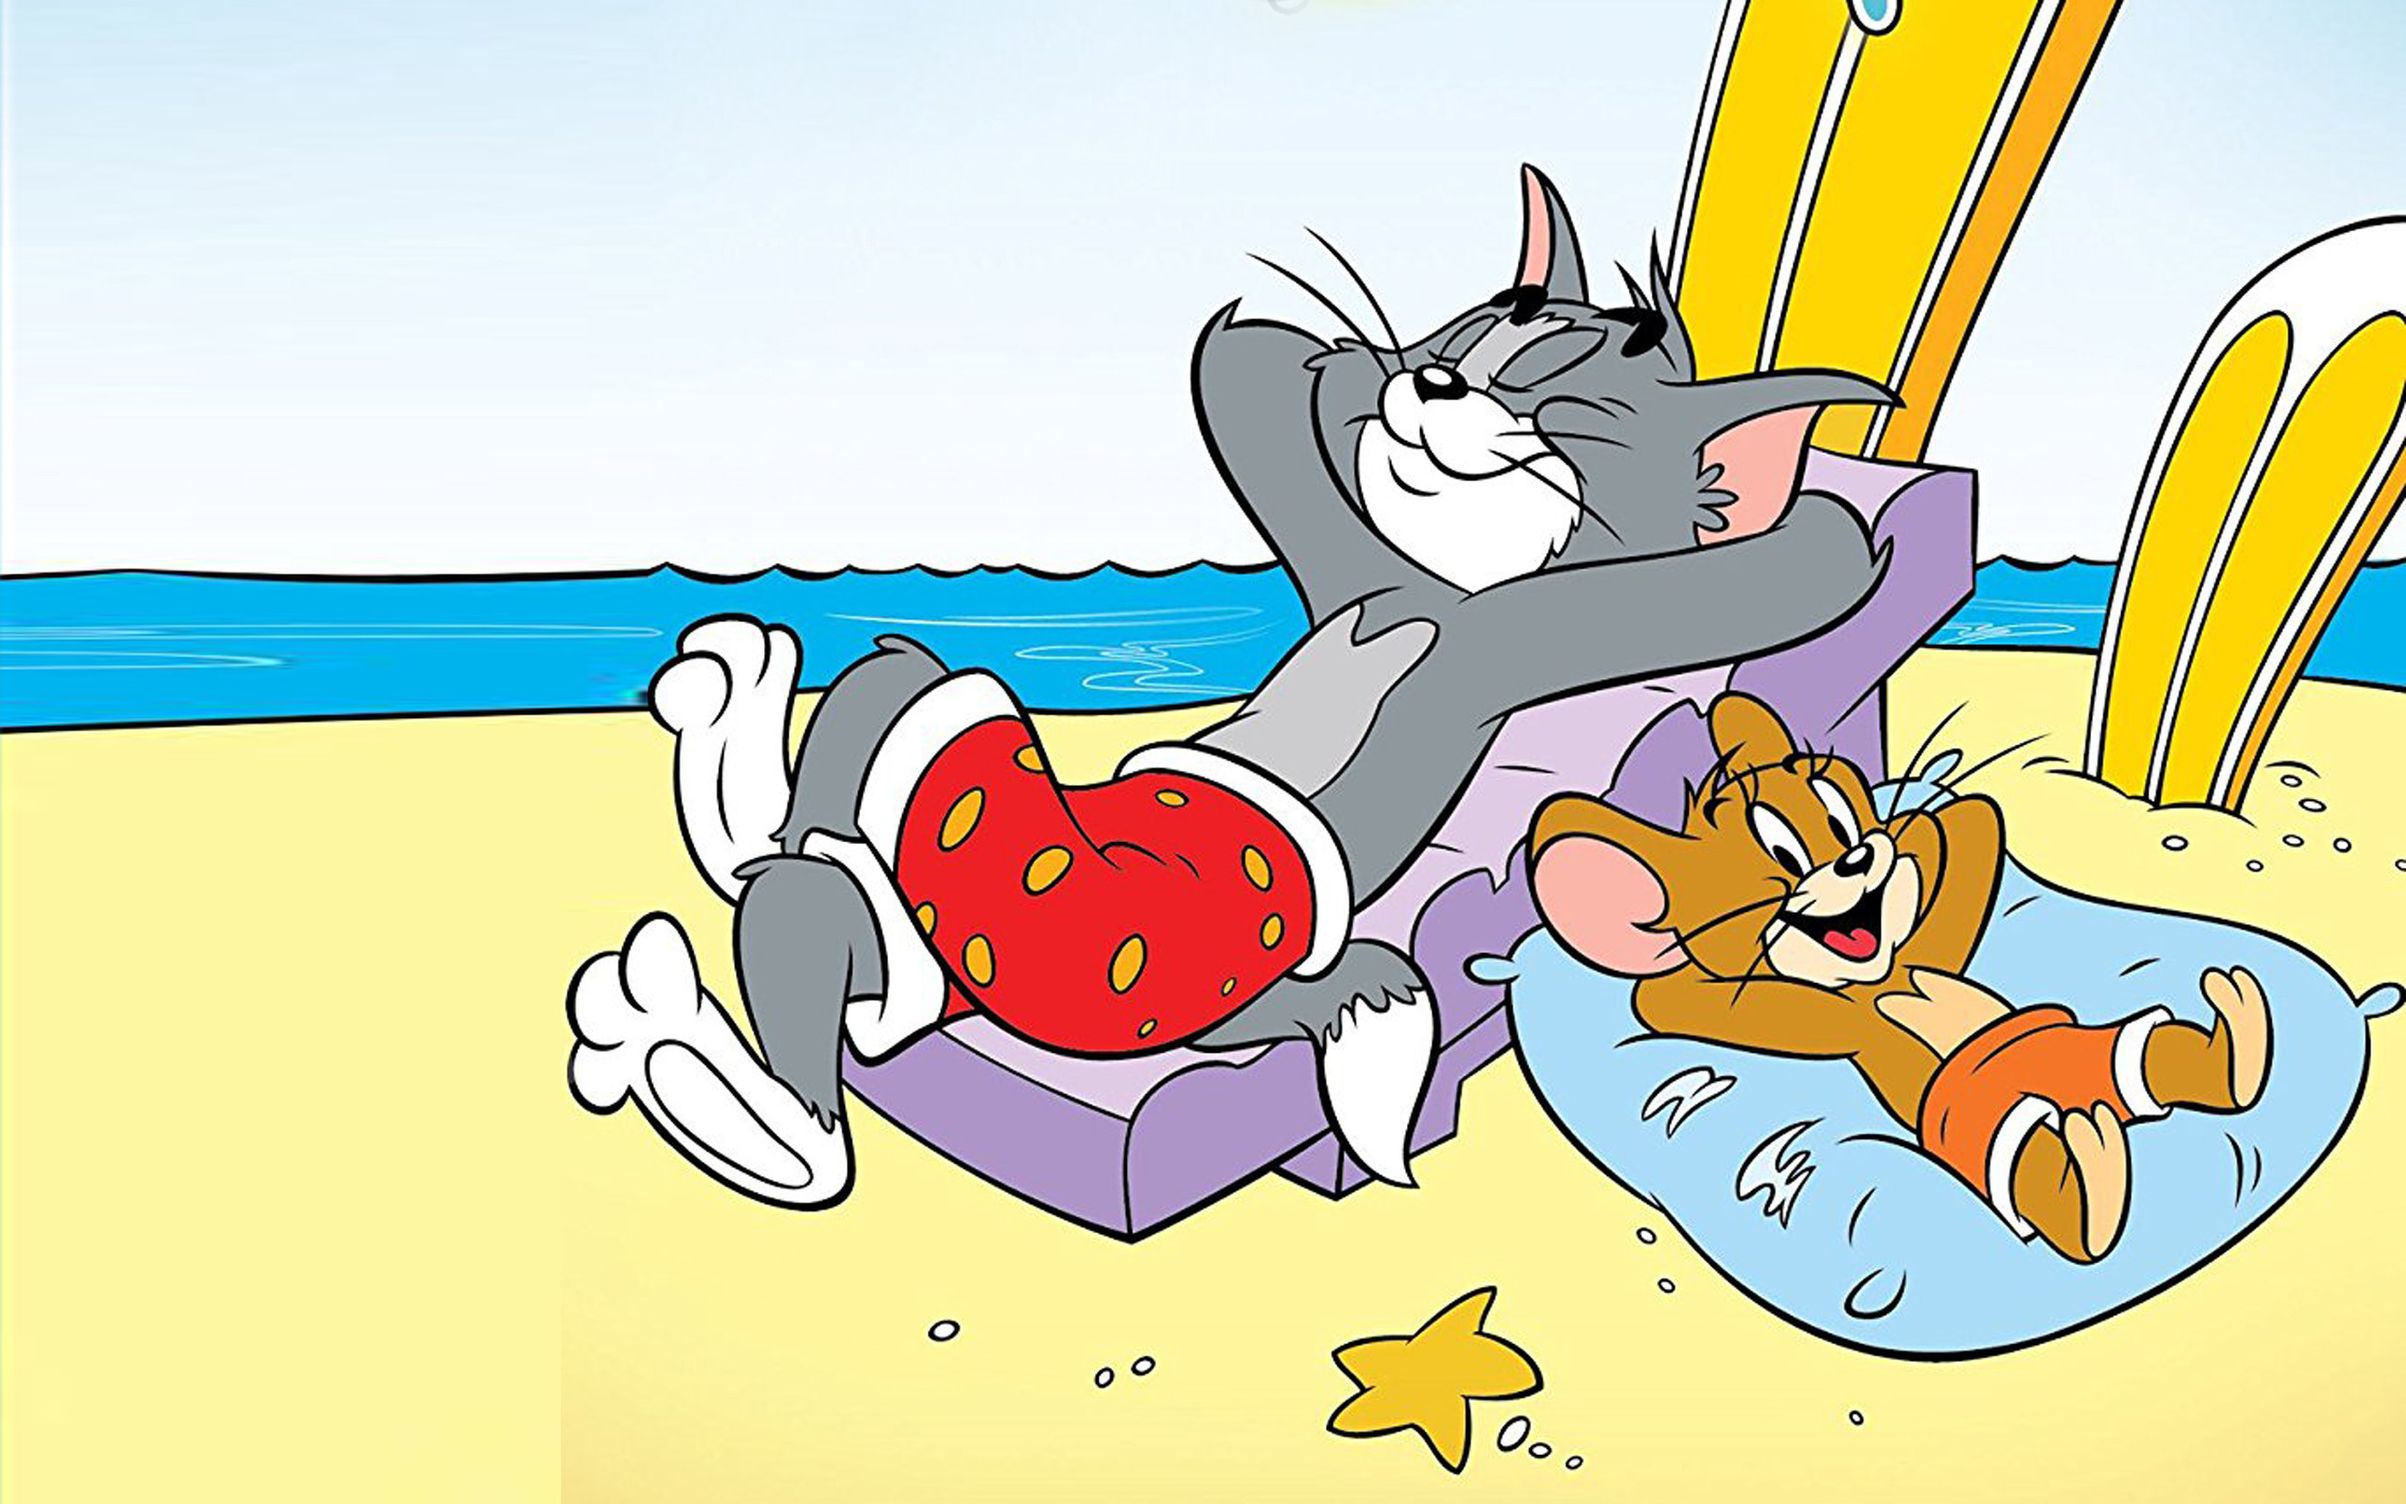 Tom and jerry 55. Tom i Jerry. Том и Джерри Джерри. Том и Джерри Tom and Jerry. Tom and Jerry cartoon.